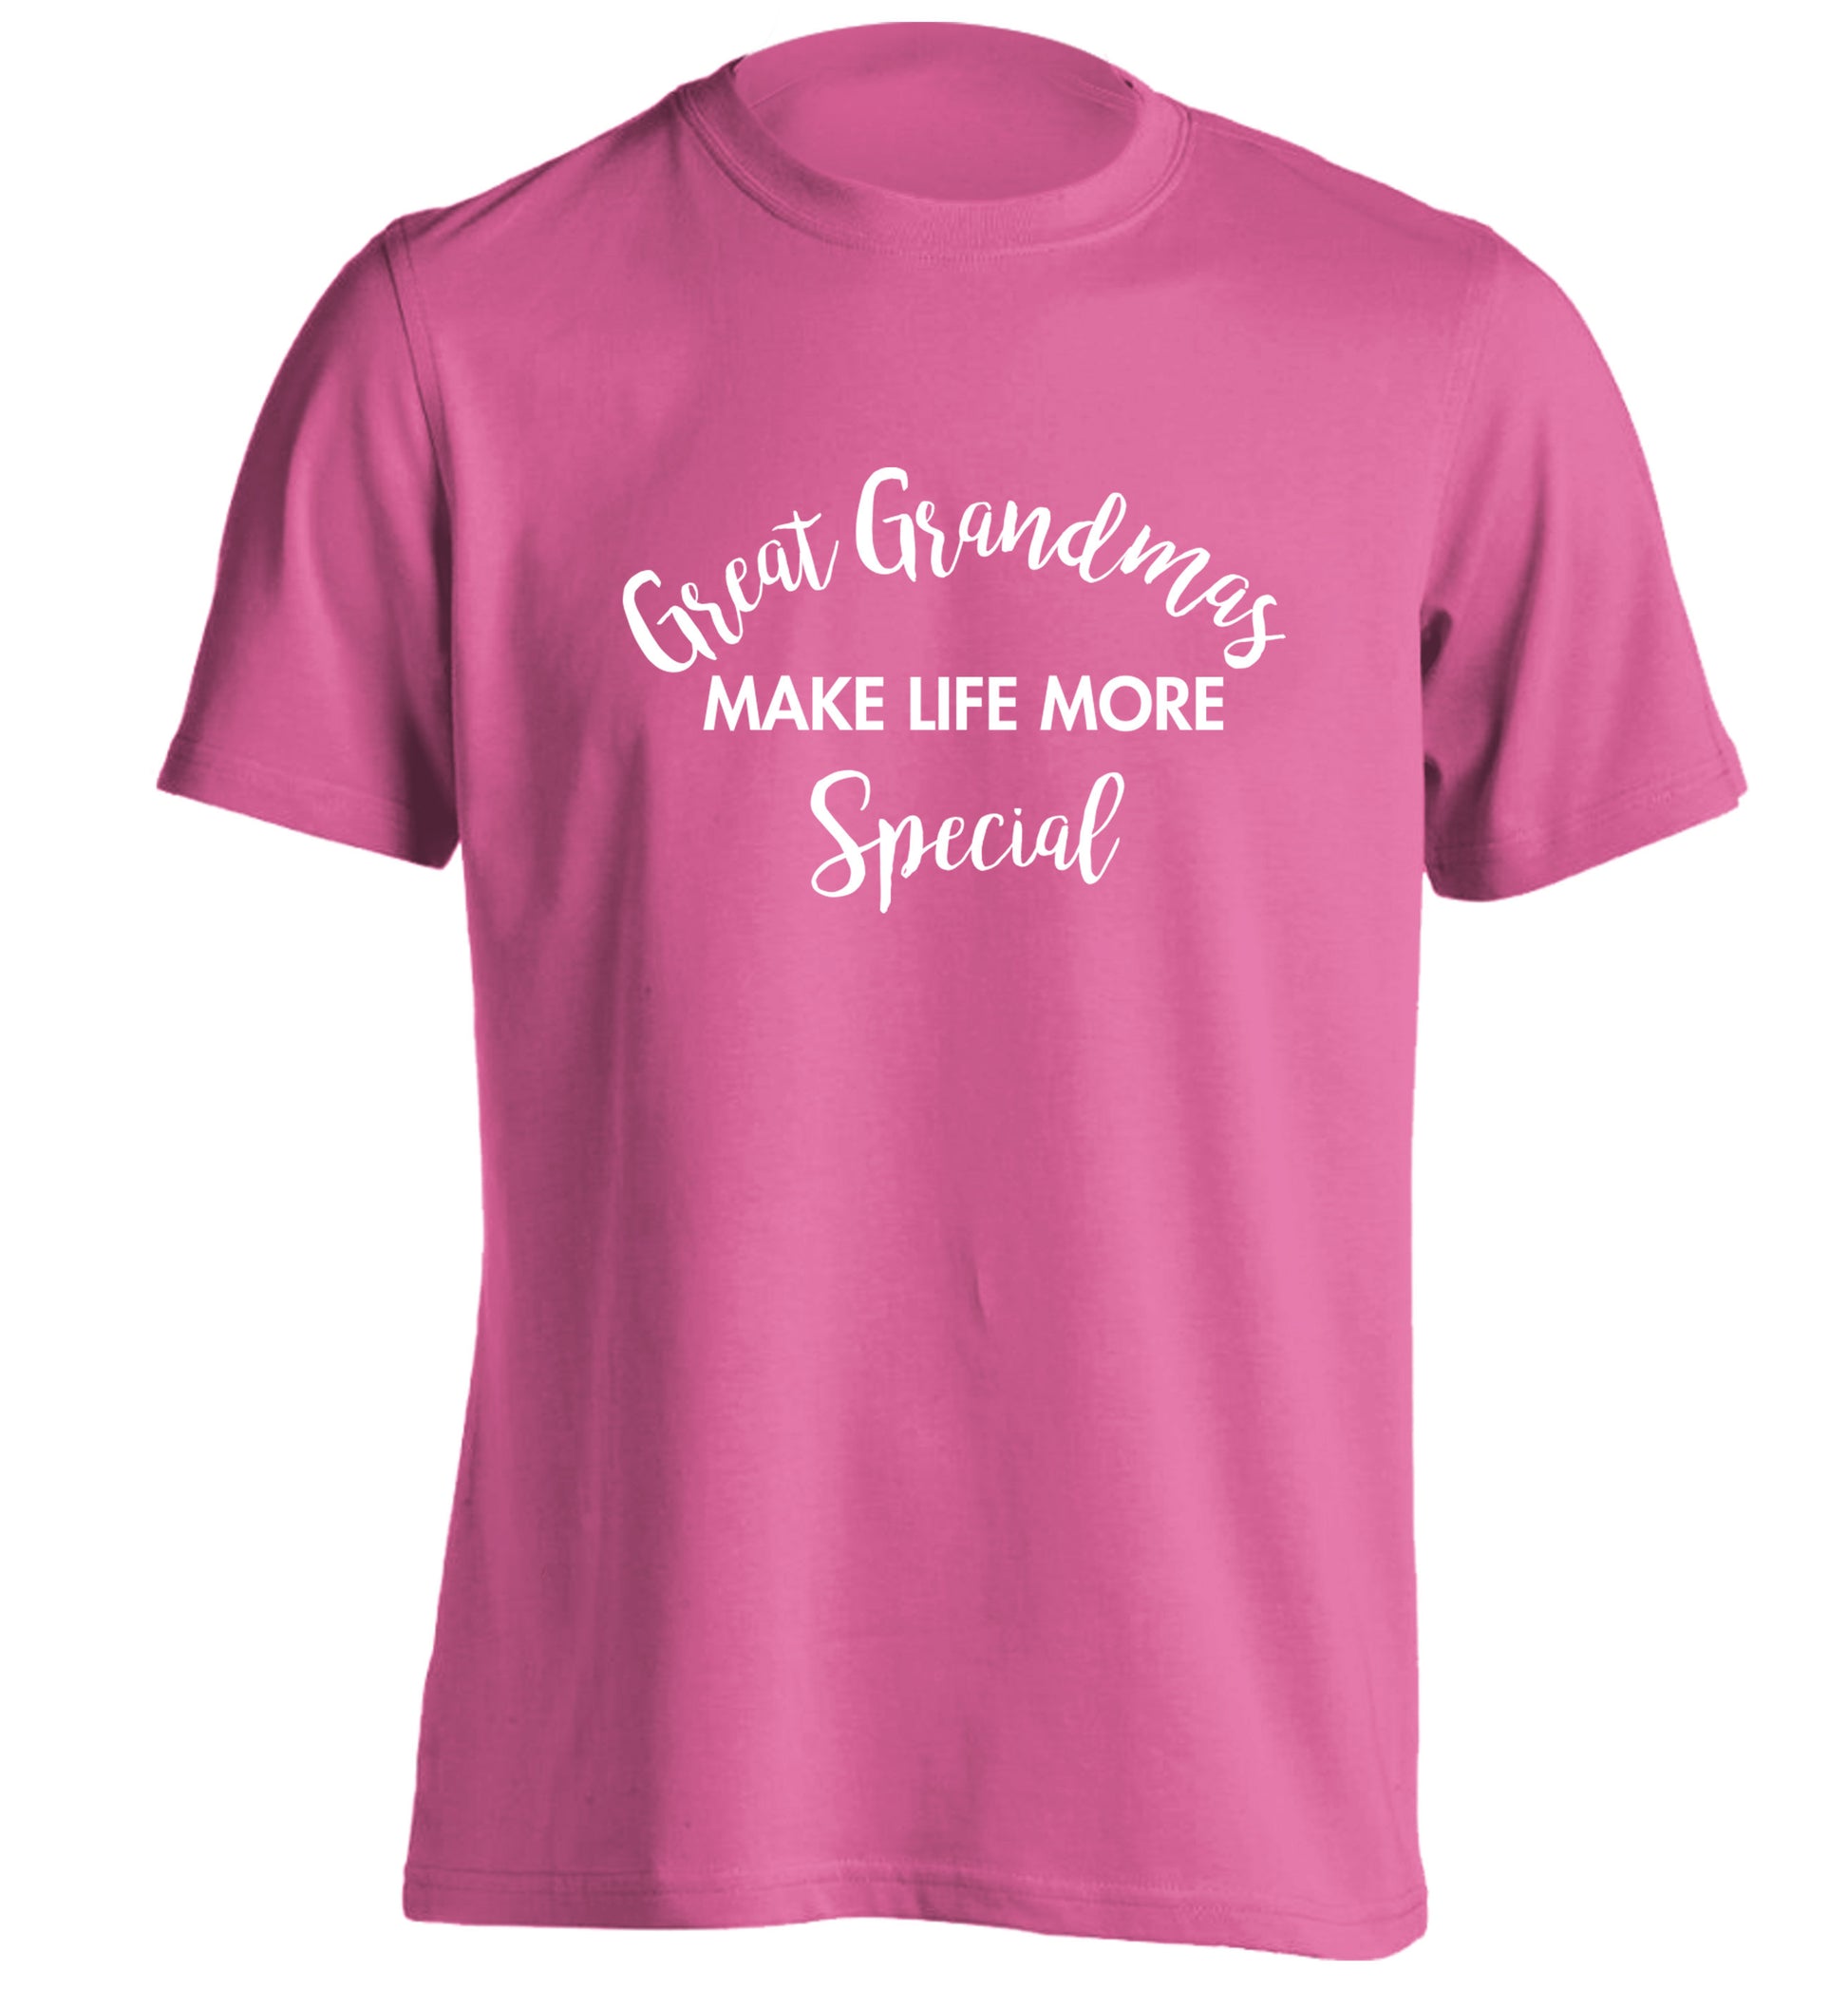 Great Grandmas make life more special adults unisex pink Tshirt 2XL